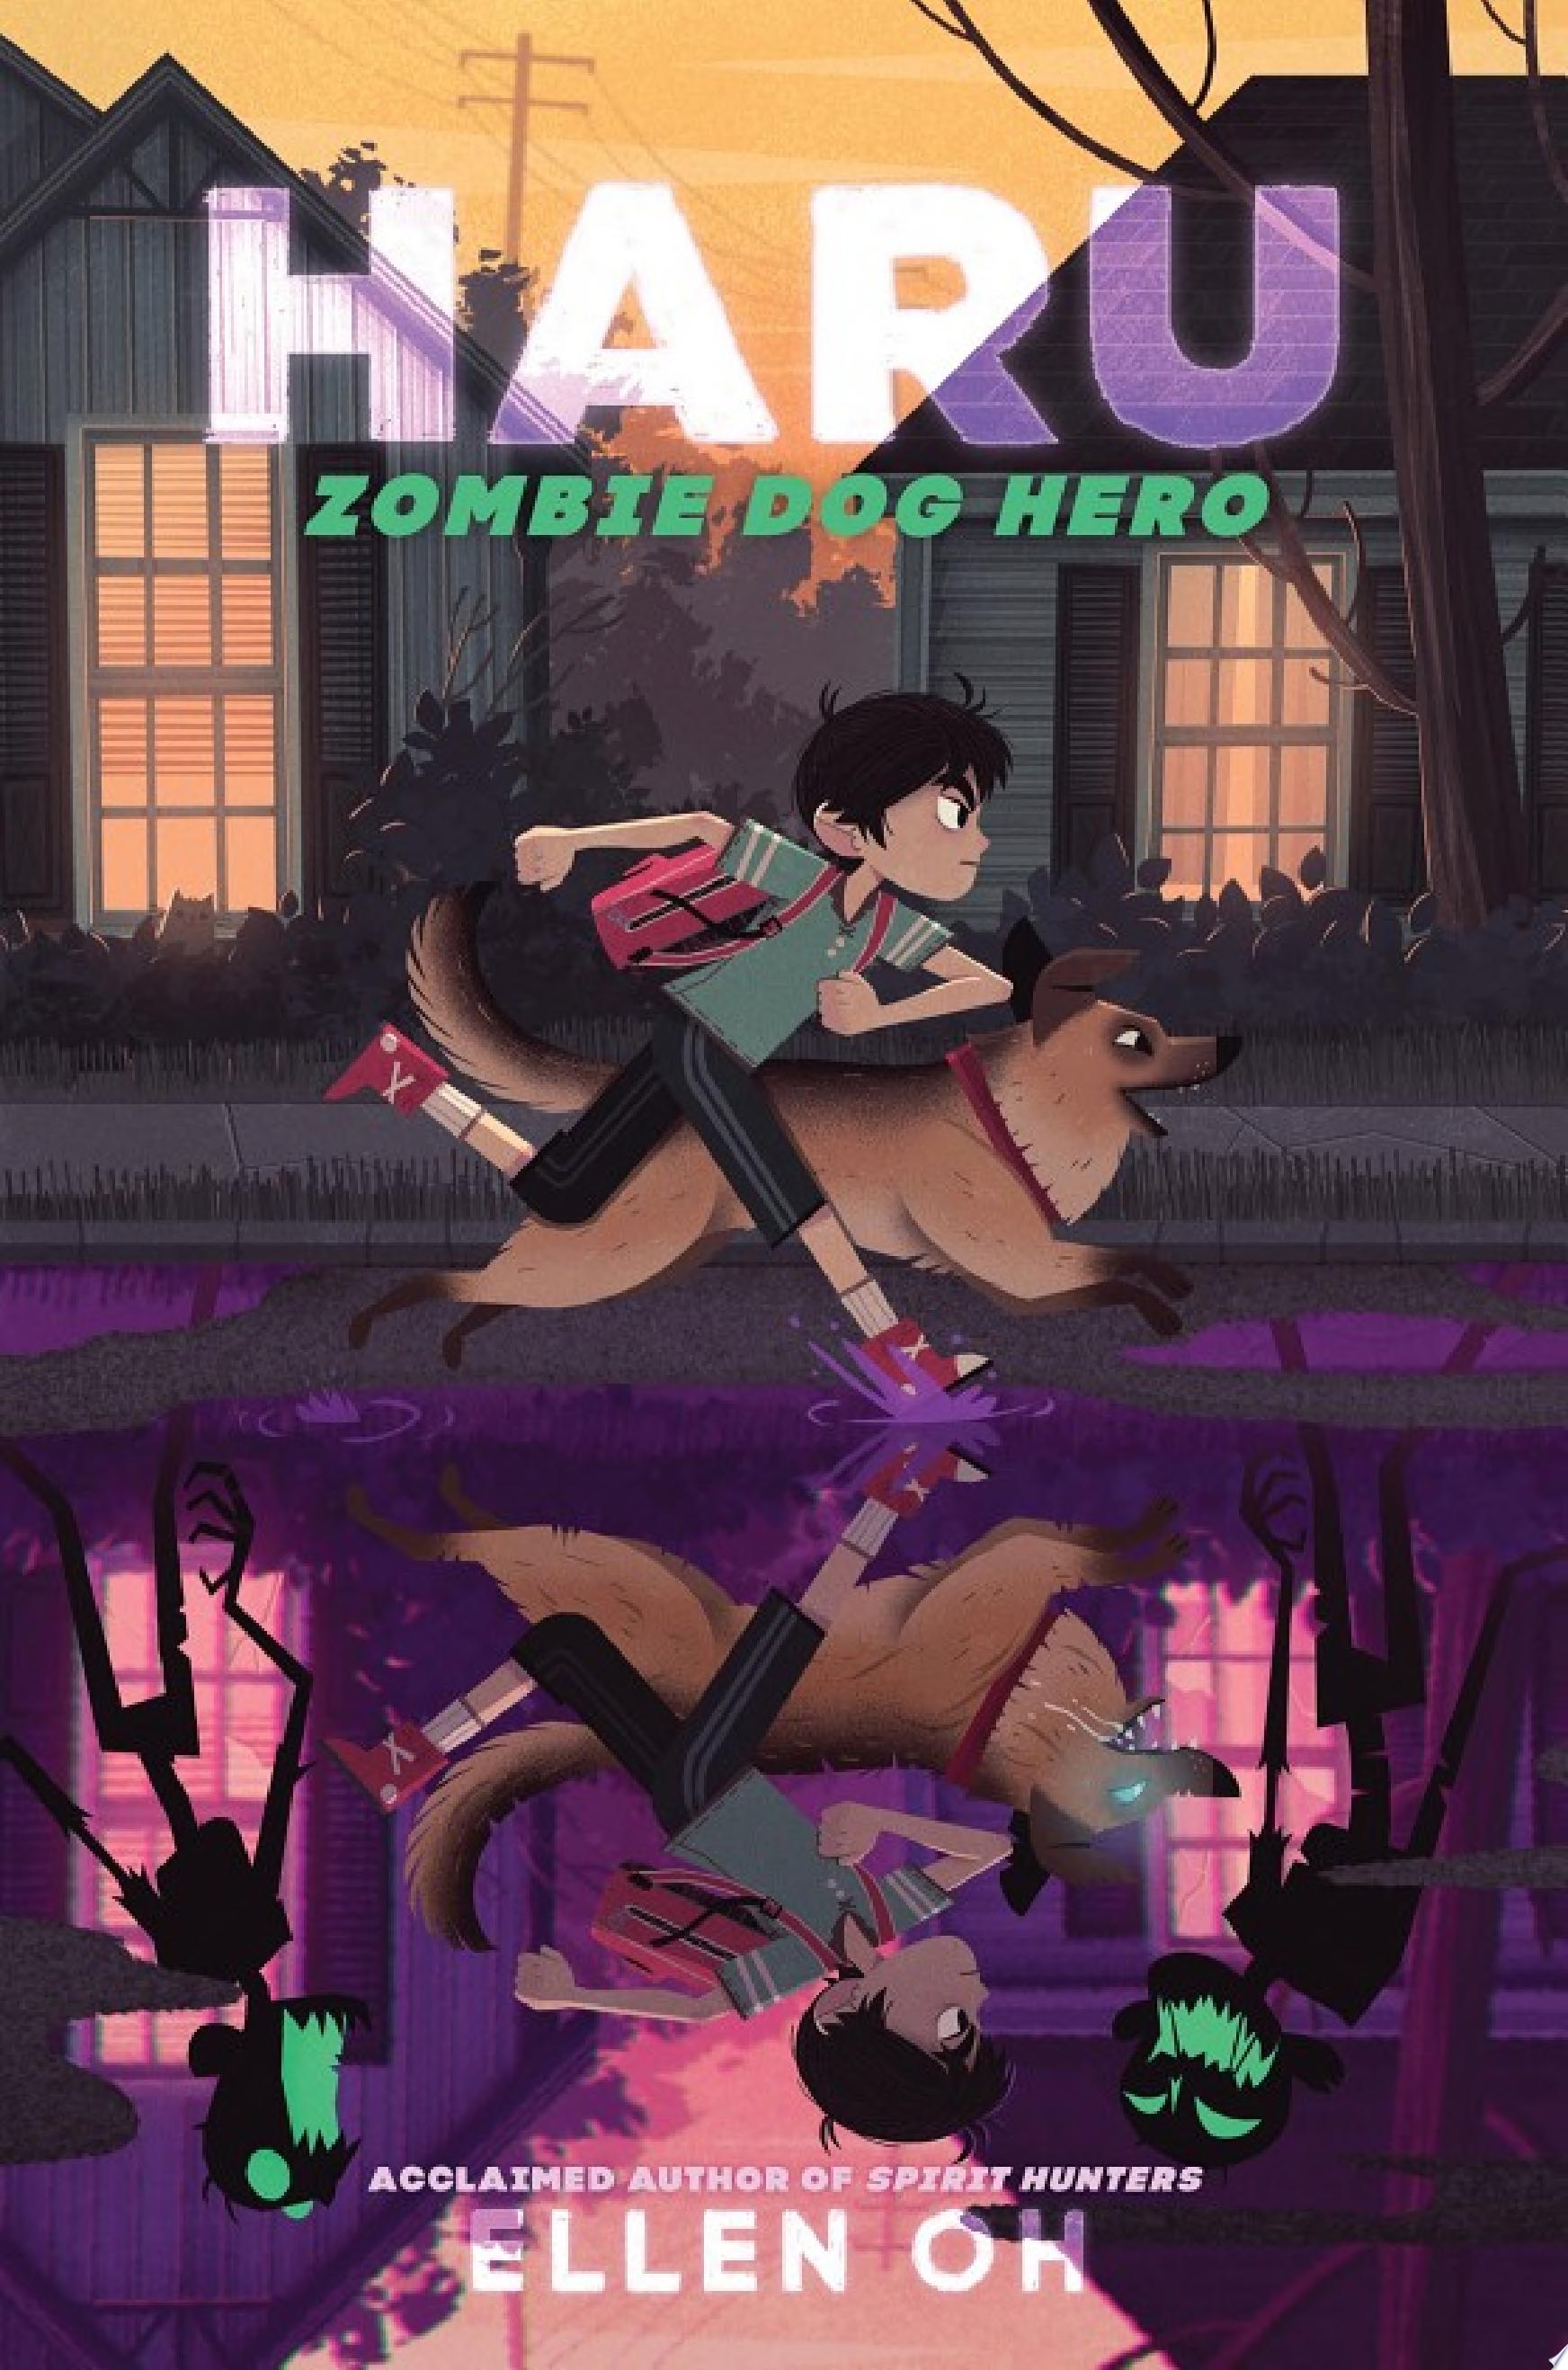 Image for "Haru, Zombie Dog Hero"